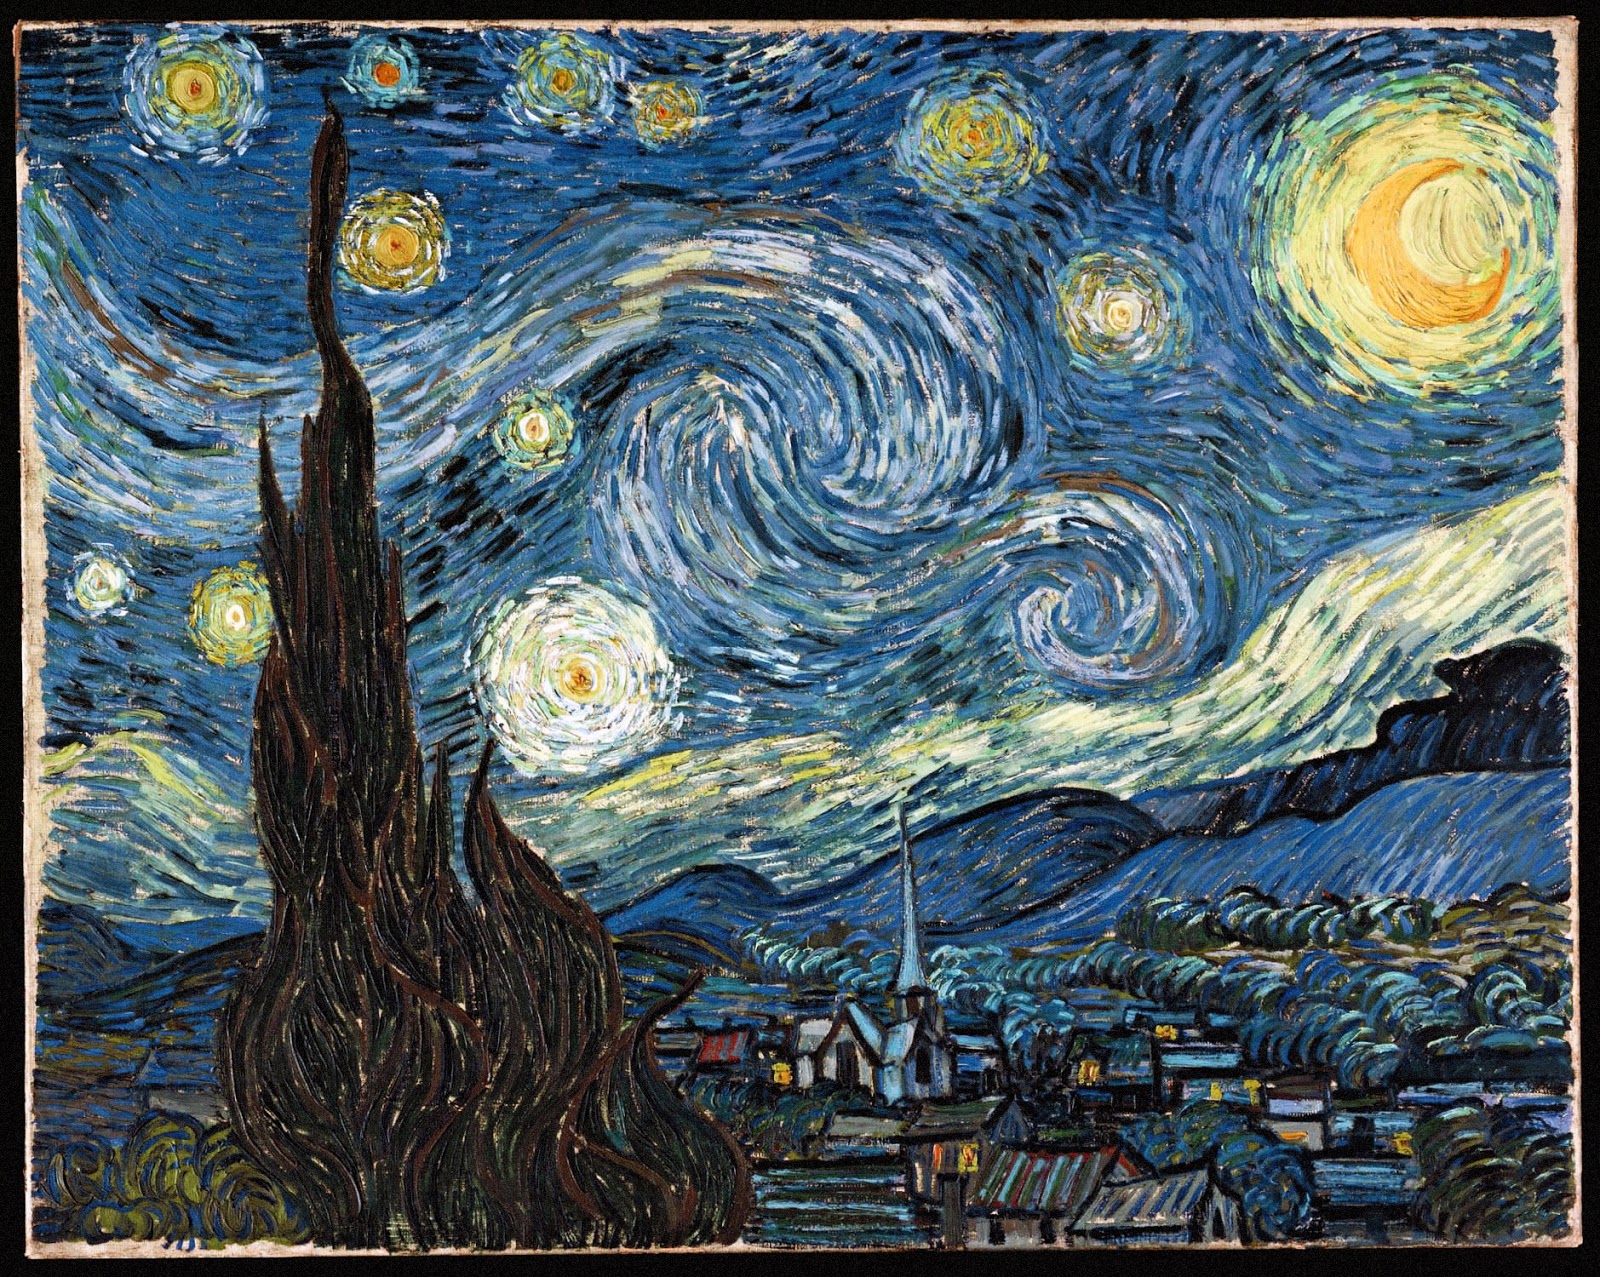 http://4.bp.blogspot.com/-TB3rpLUgIs4/T6VdDmn7GzI/AAAAAAAAAu0/mSY842GTy54/s1600/Vincent_van_Gogh_Starry_Night.jpg